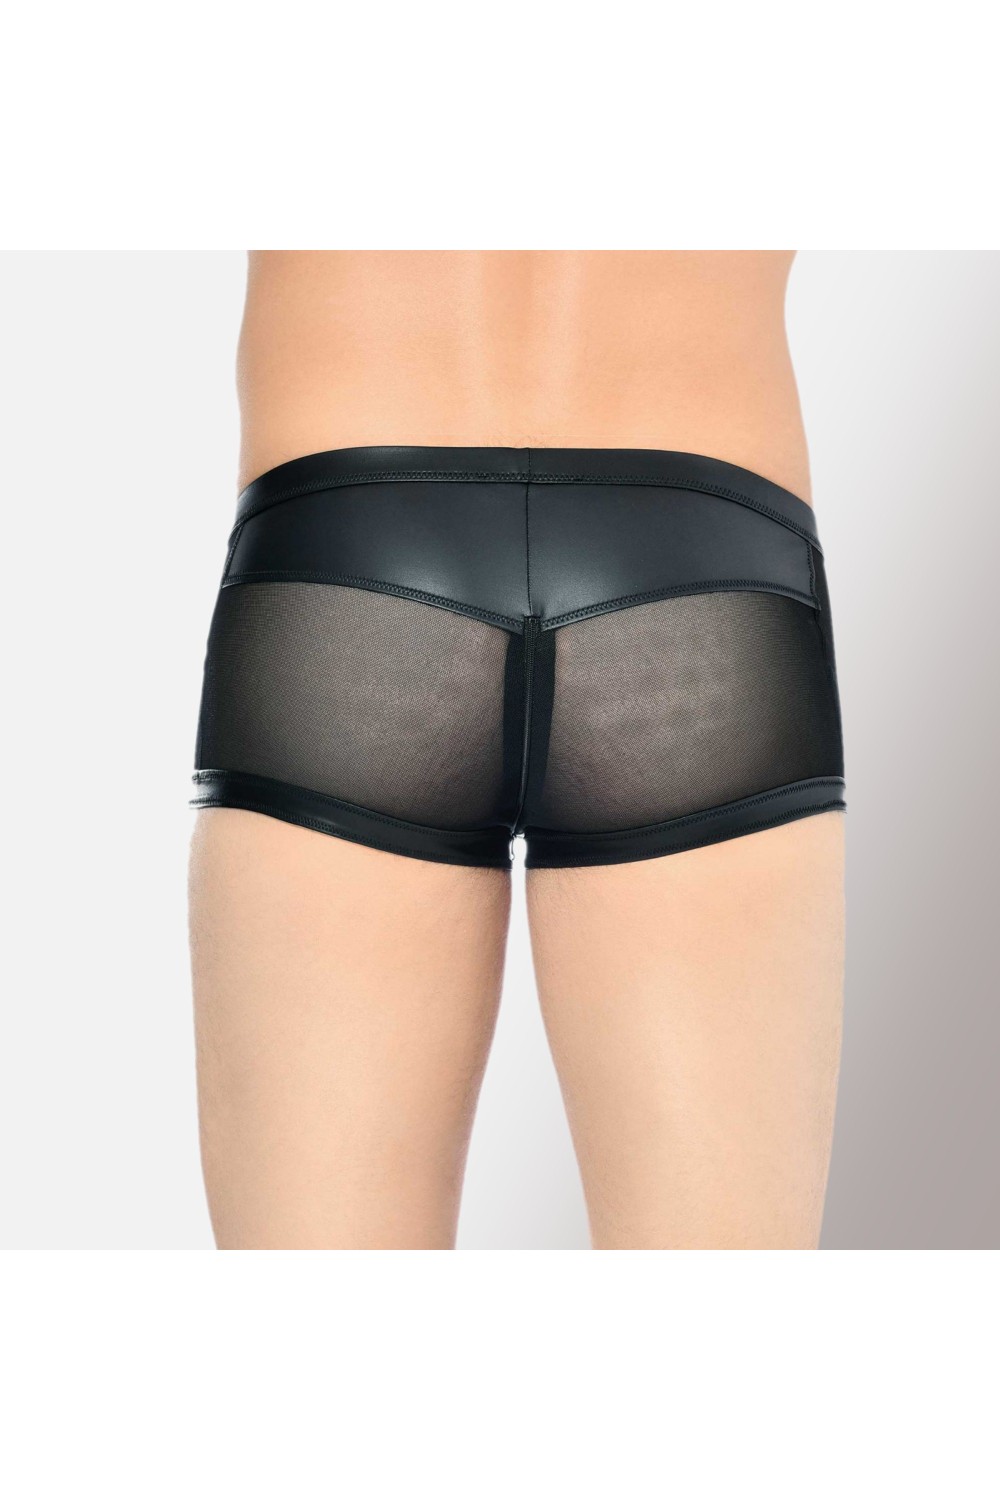 Tyrion, sexy black wetlook trunks - Patrice Catanzaro Official Website